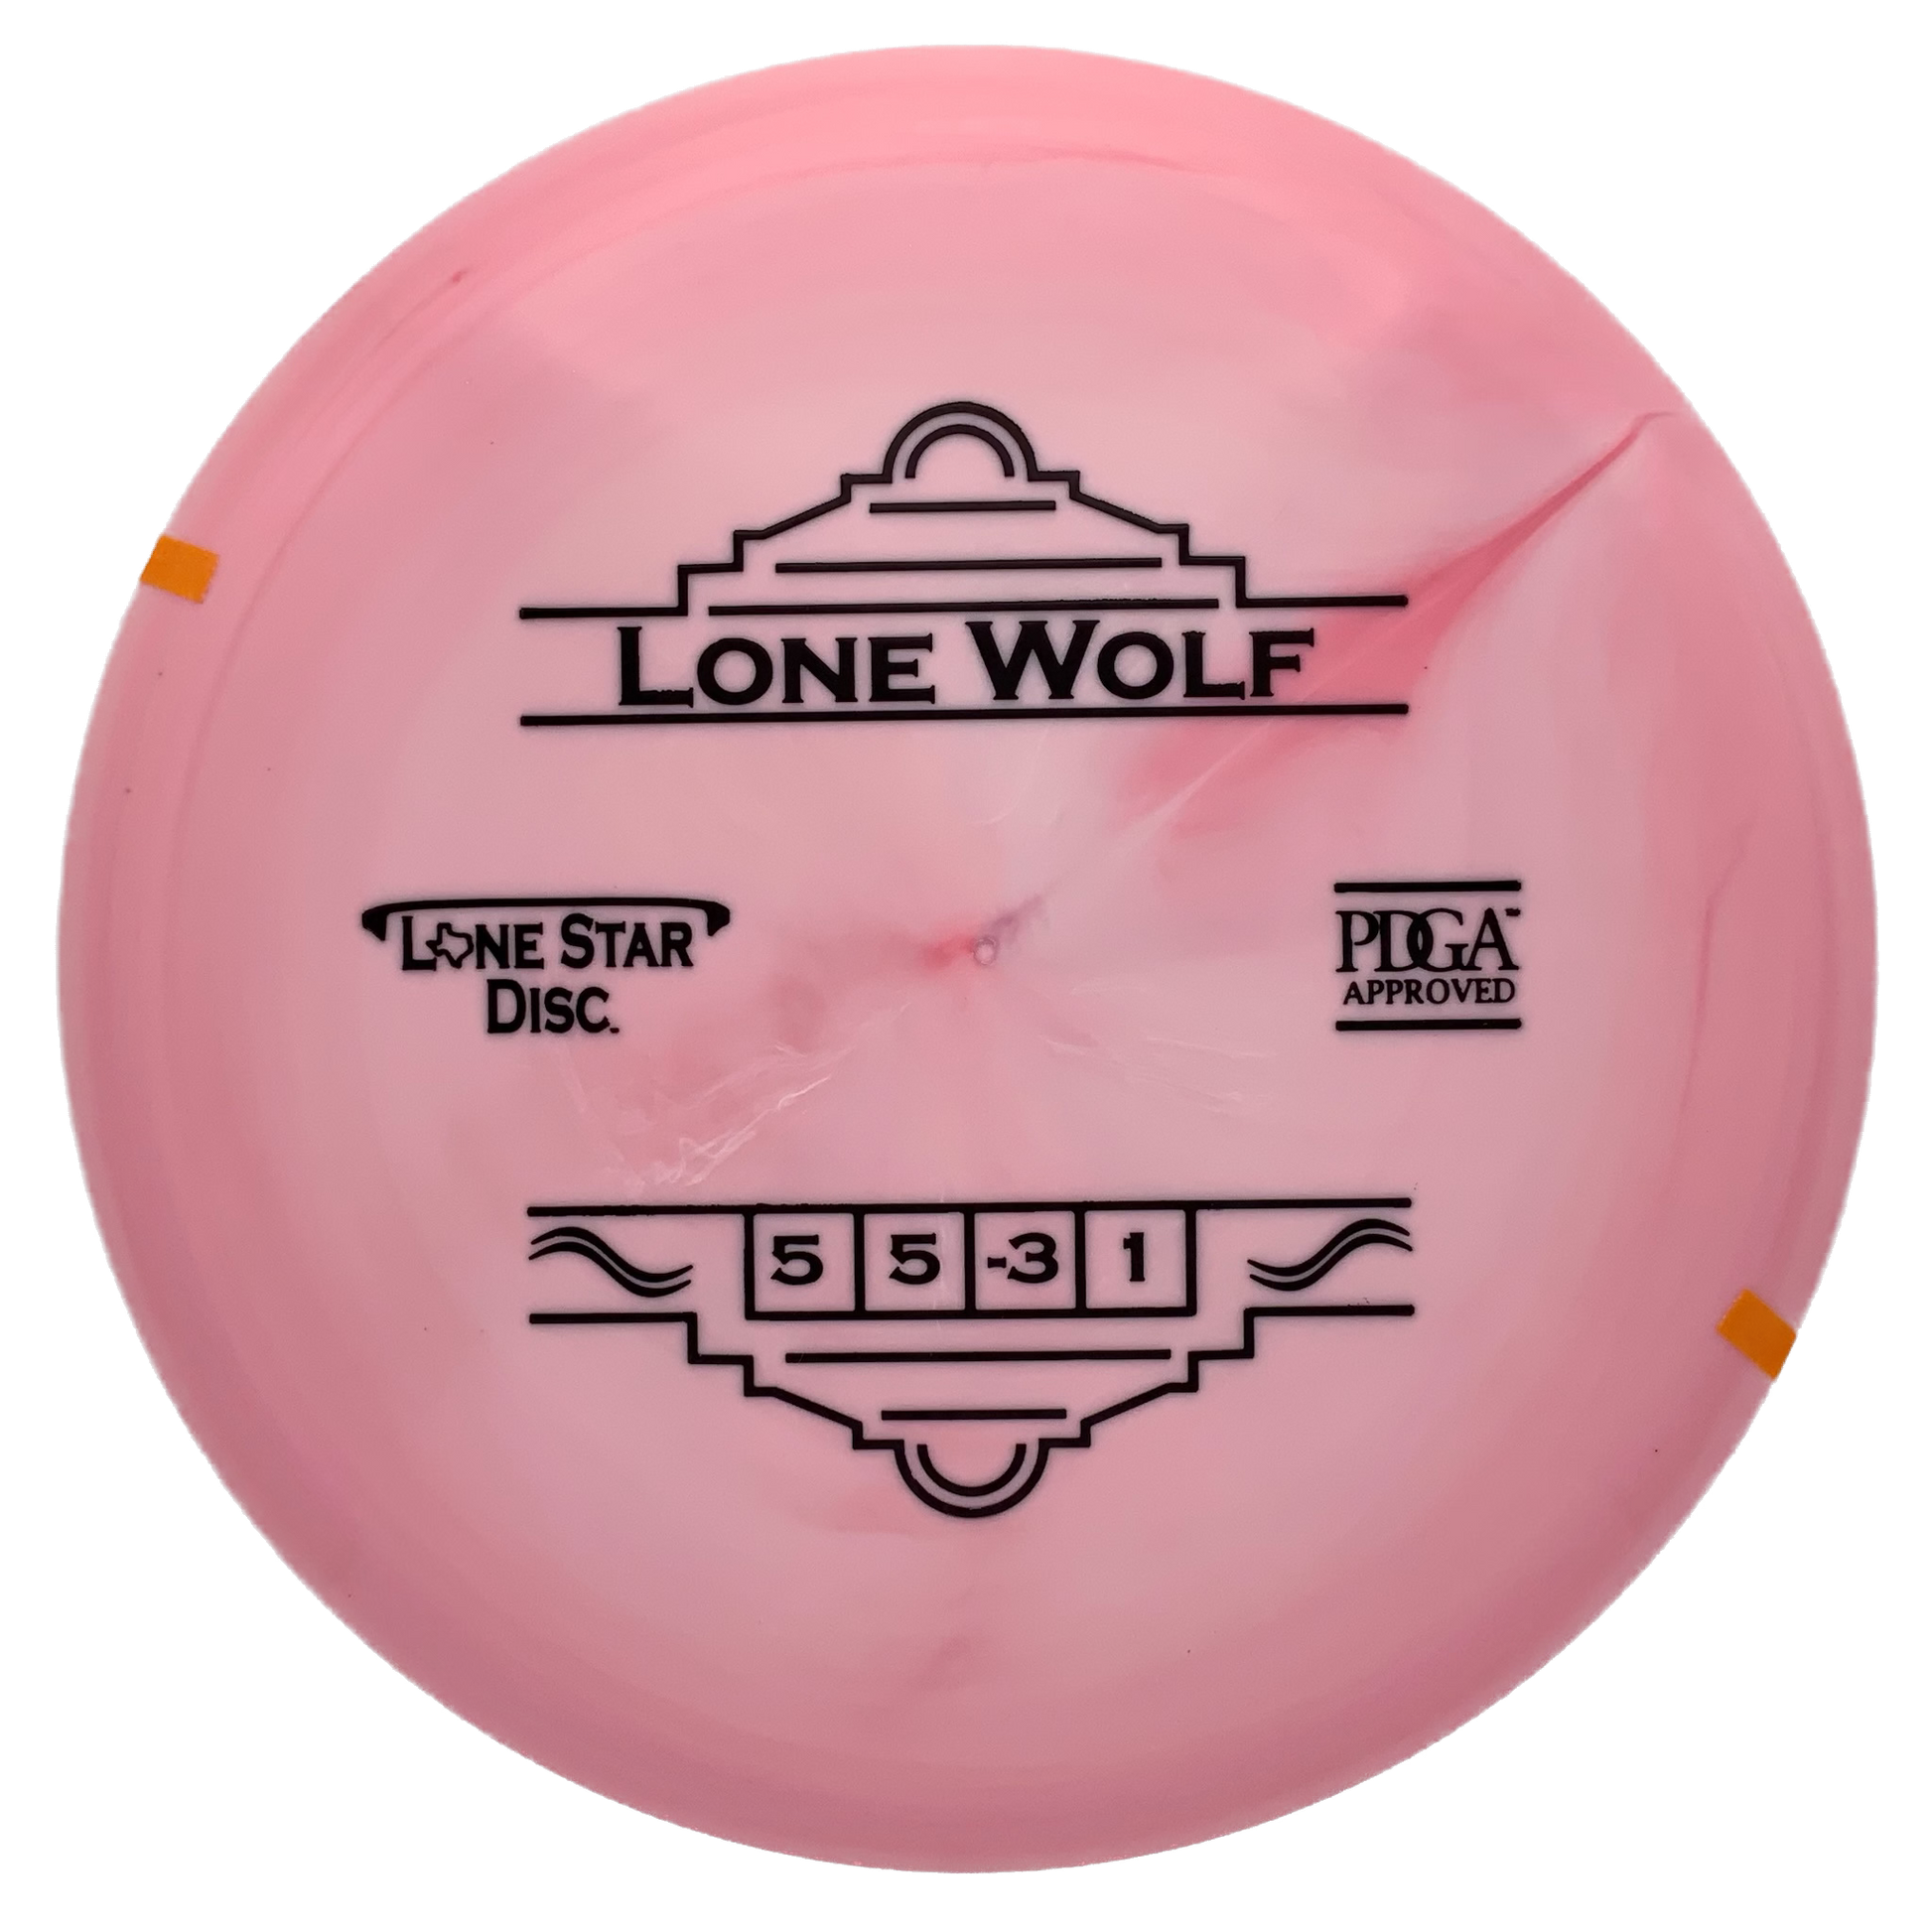 Lone Star Lone Wolf - Astro Discs TX - Houston Disc Golf